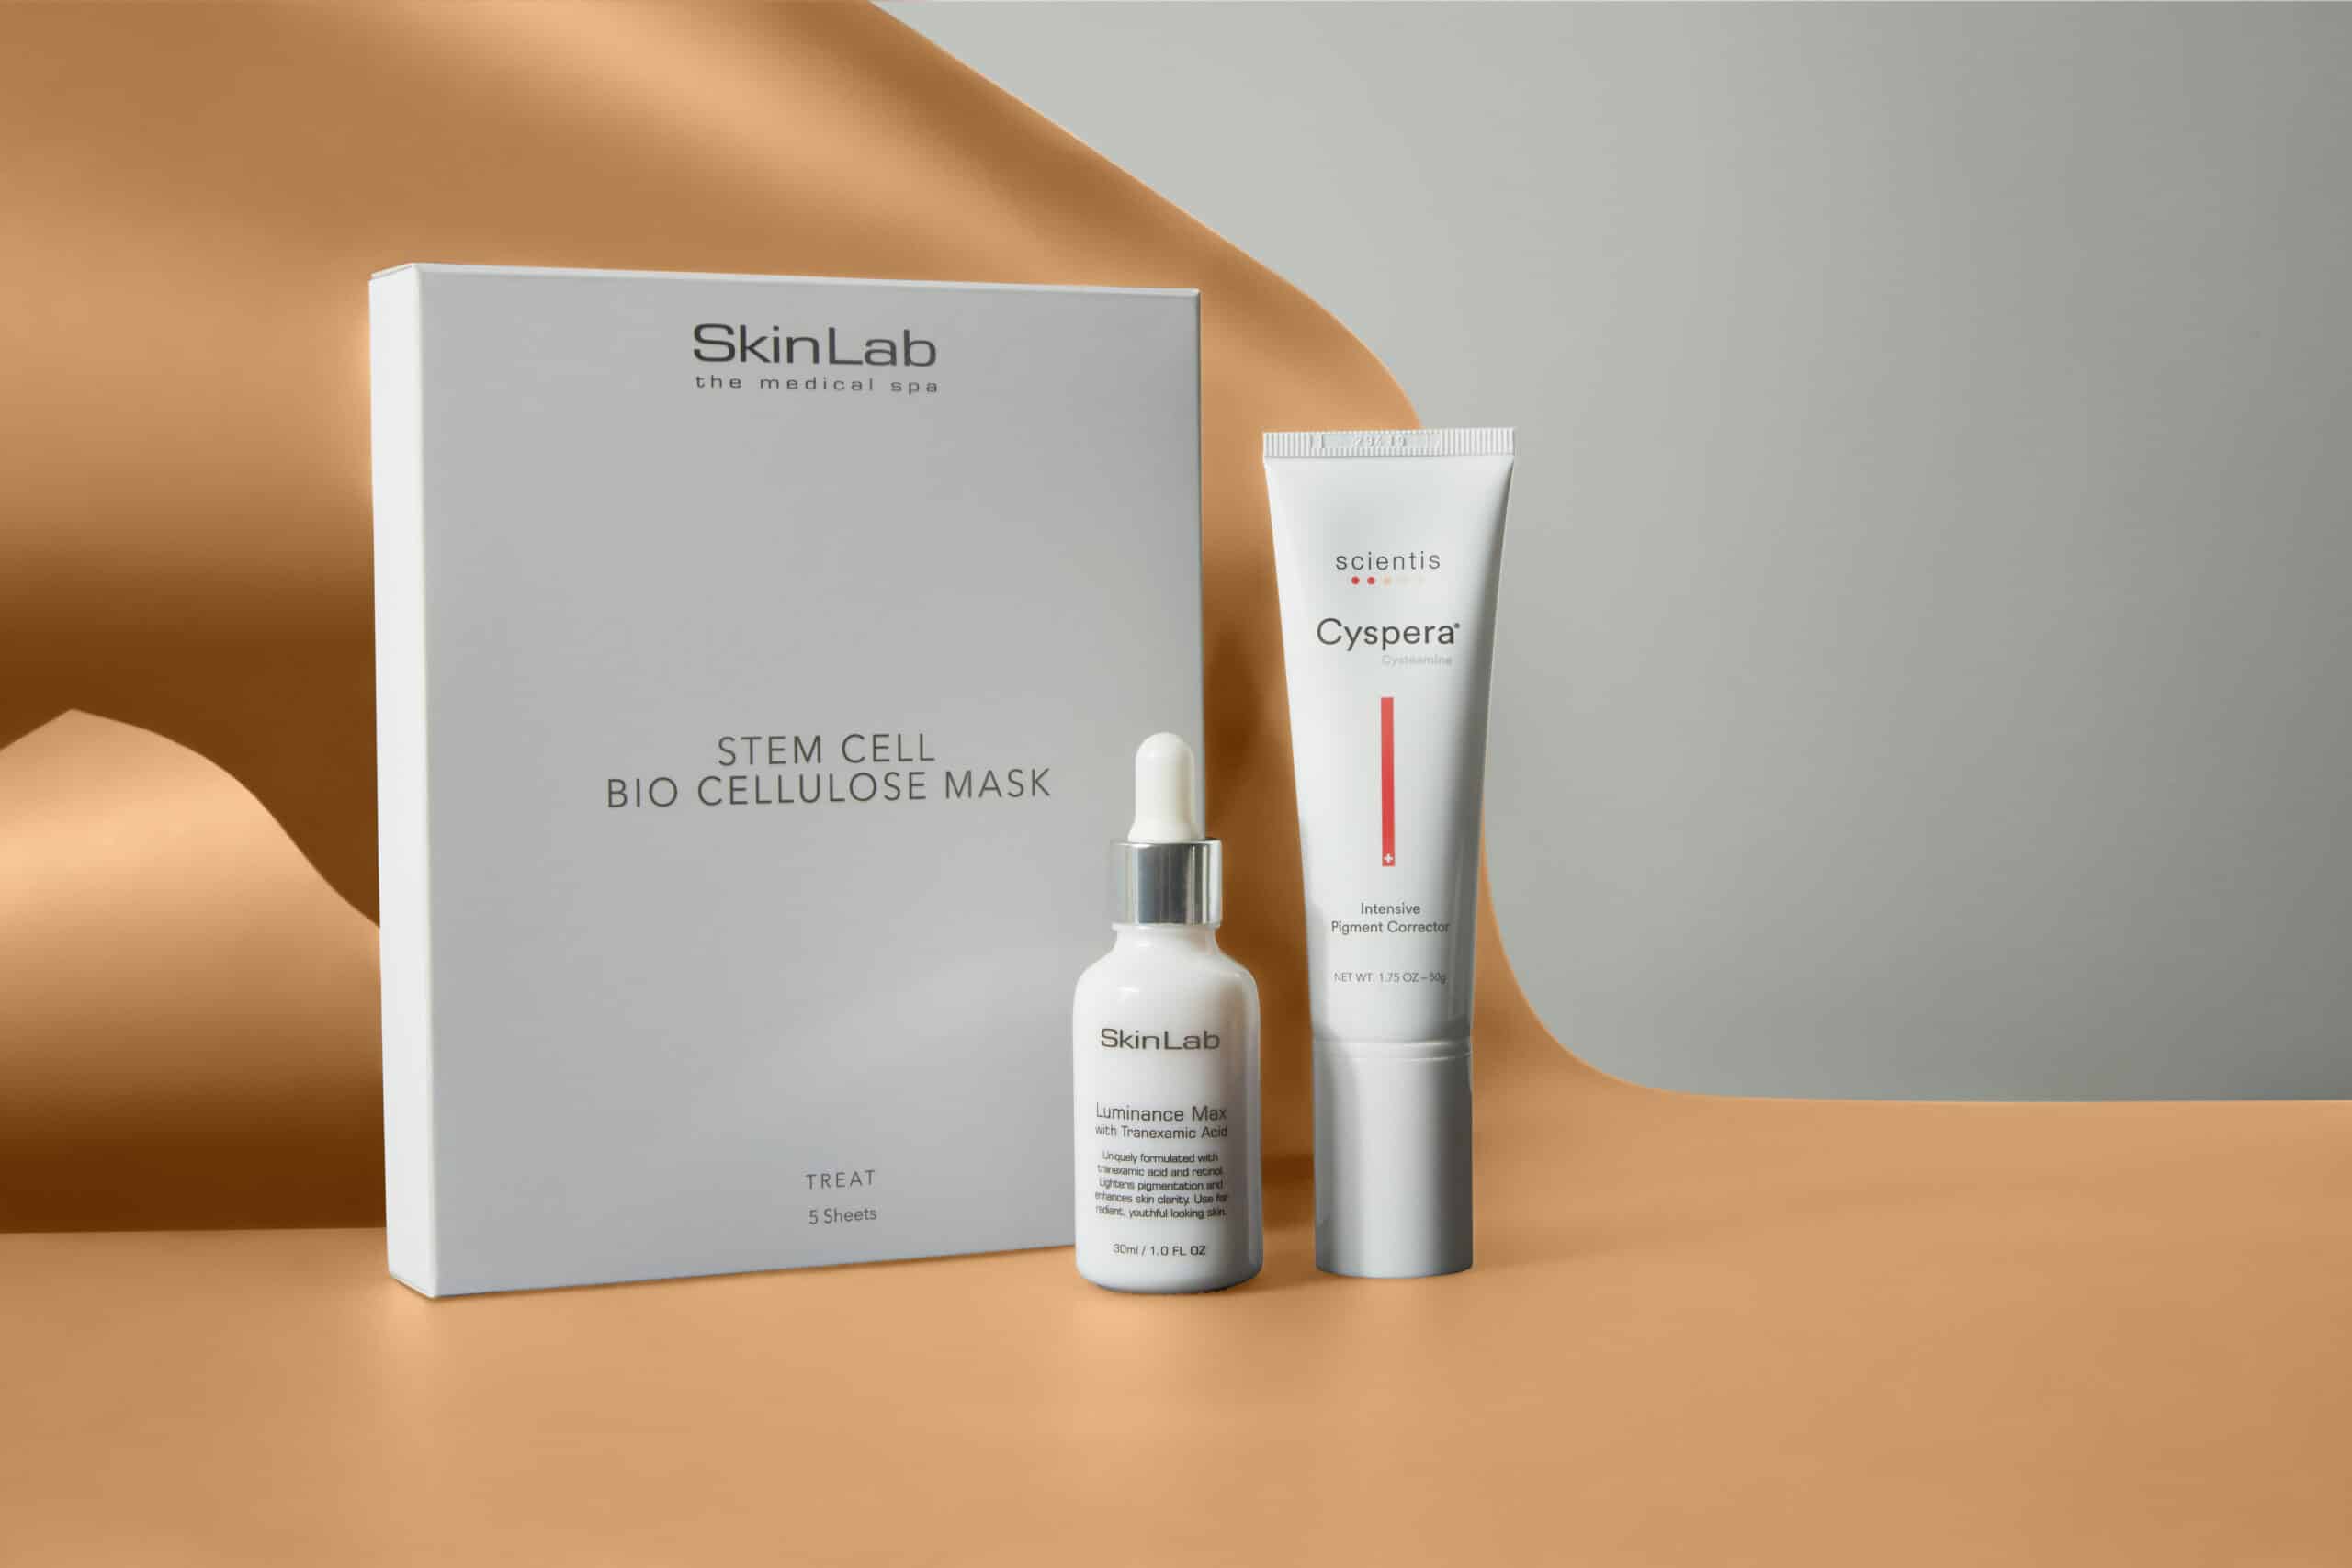 SLMS – Pigmented Skin 1 of 4 (Stem Cell Mask, Luminance Max, Cyspera)